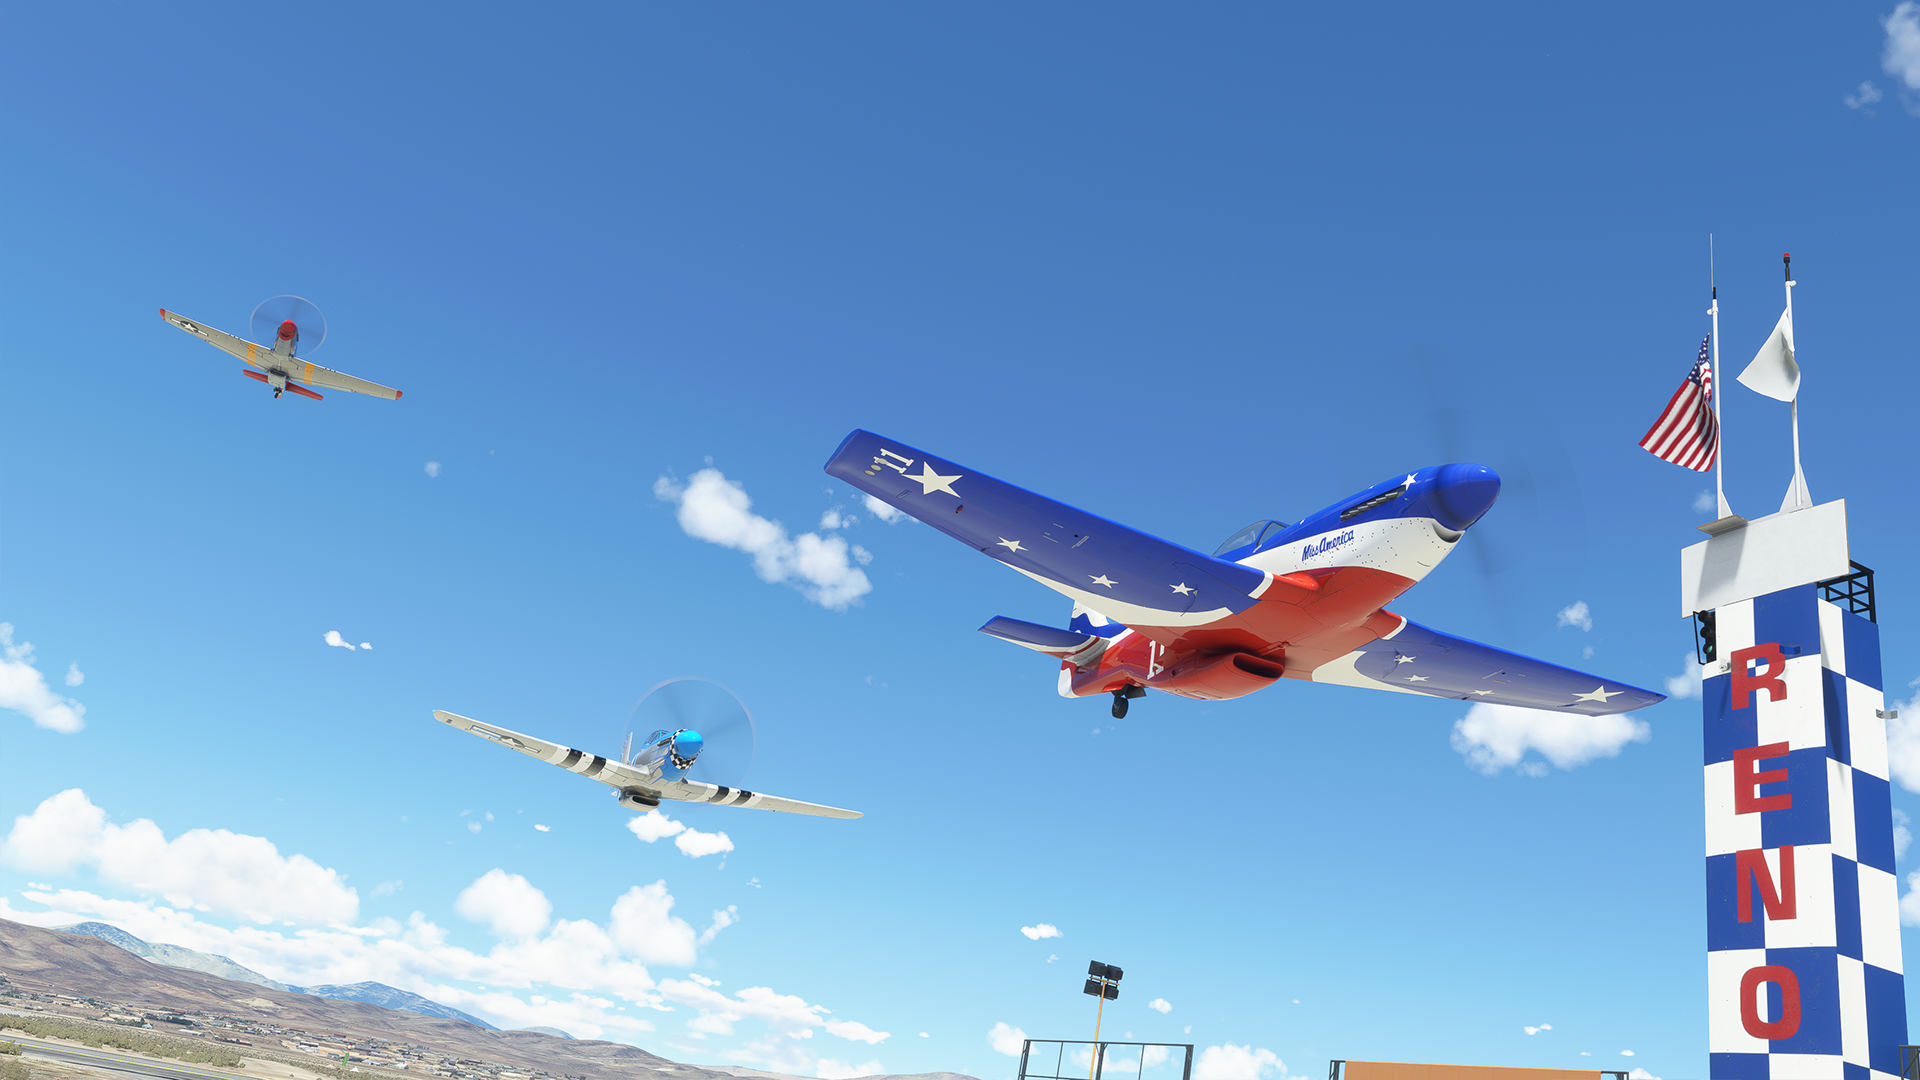 Microsoft Flight Simulator - Reno Air Races Expansion Pack